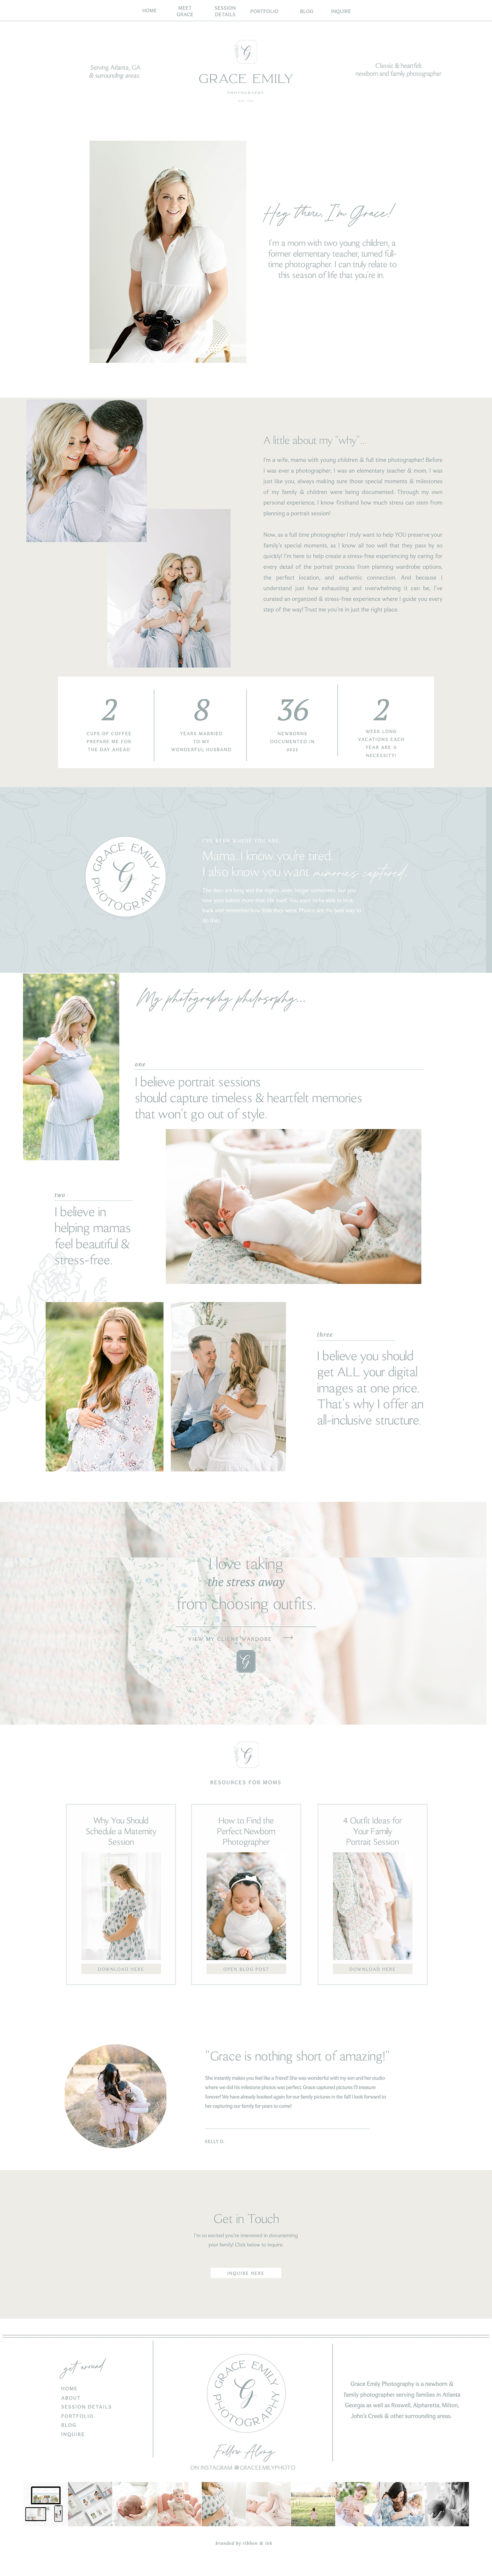 showit website / custom showit site / web designer / branding for creatives and wedding businesses / feminine / fine art / motherhood photographer